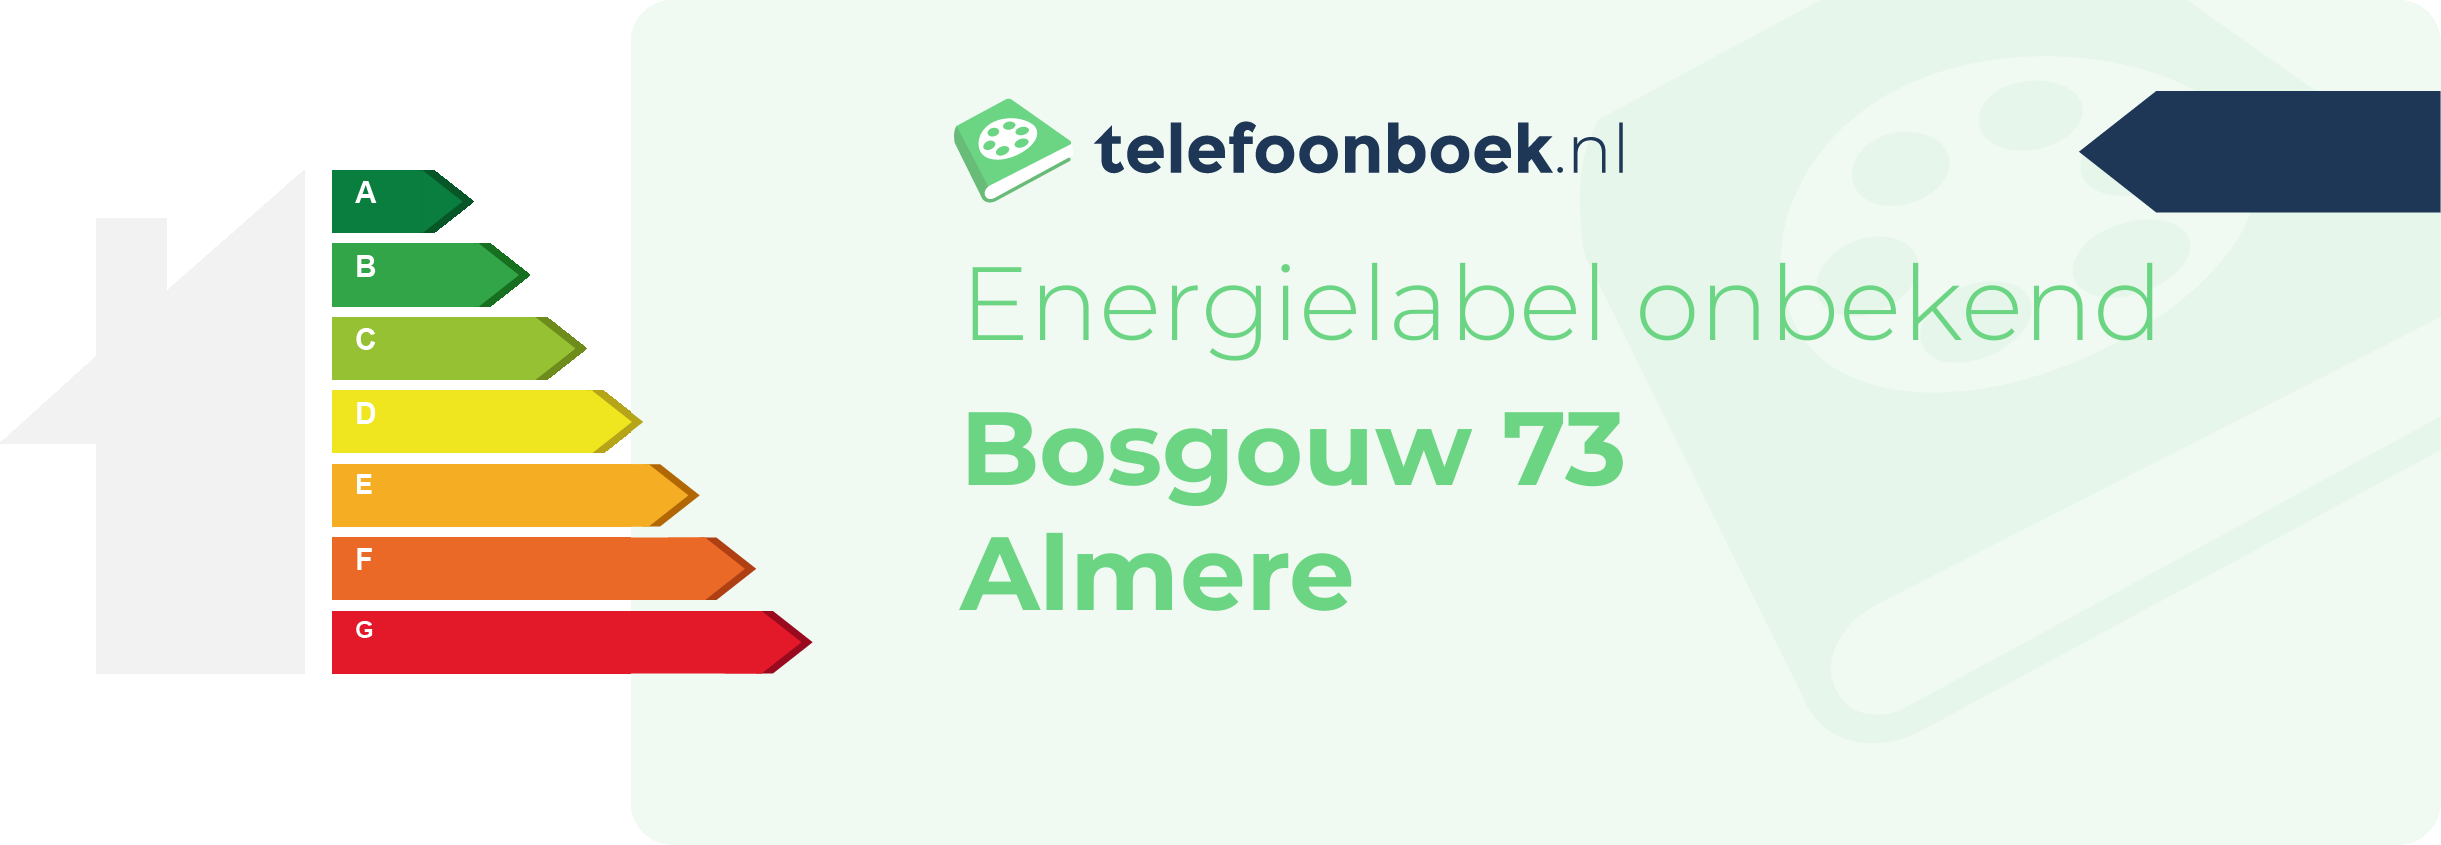 Energielabel Bosgouw 73 Almere